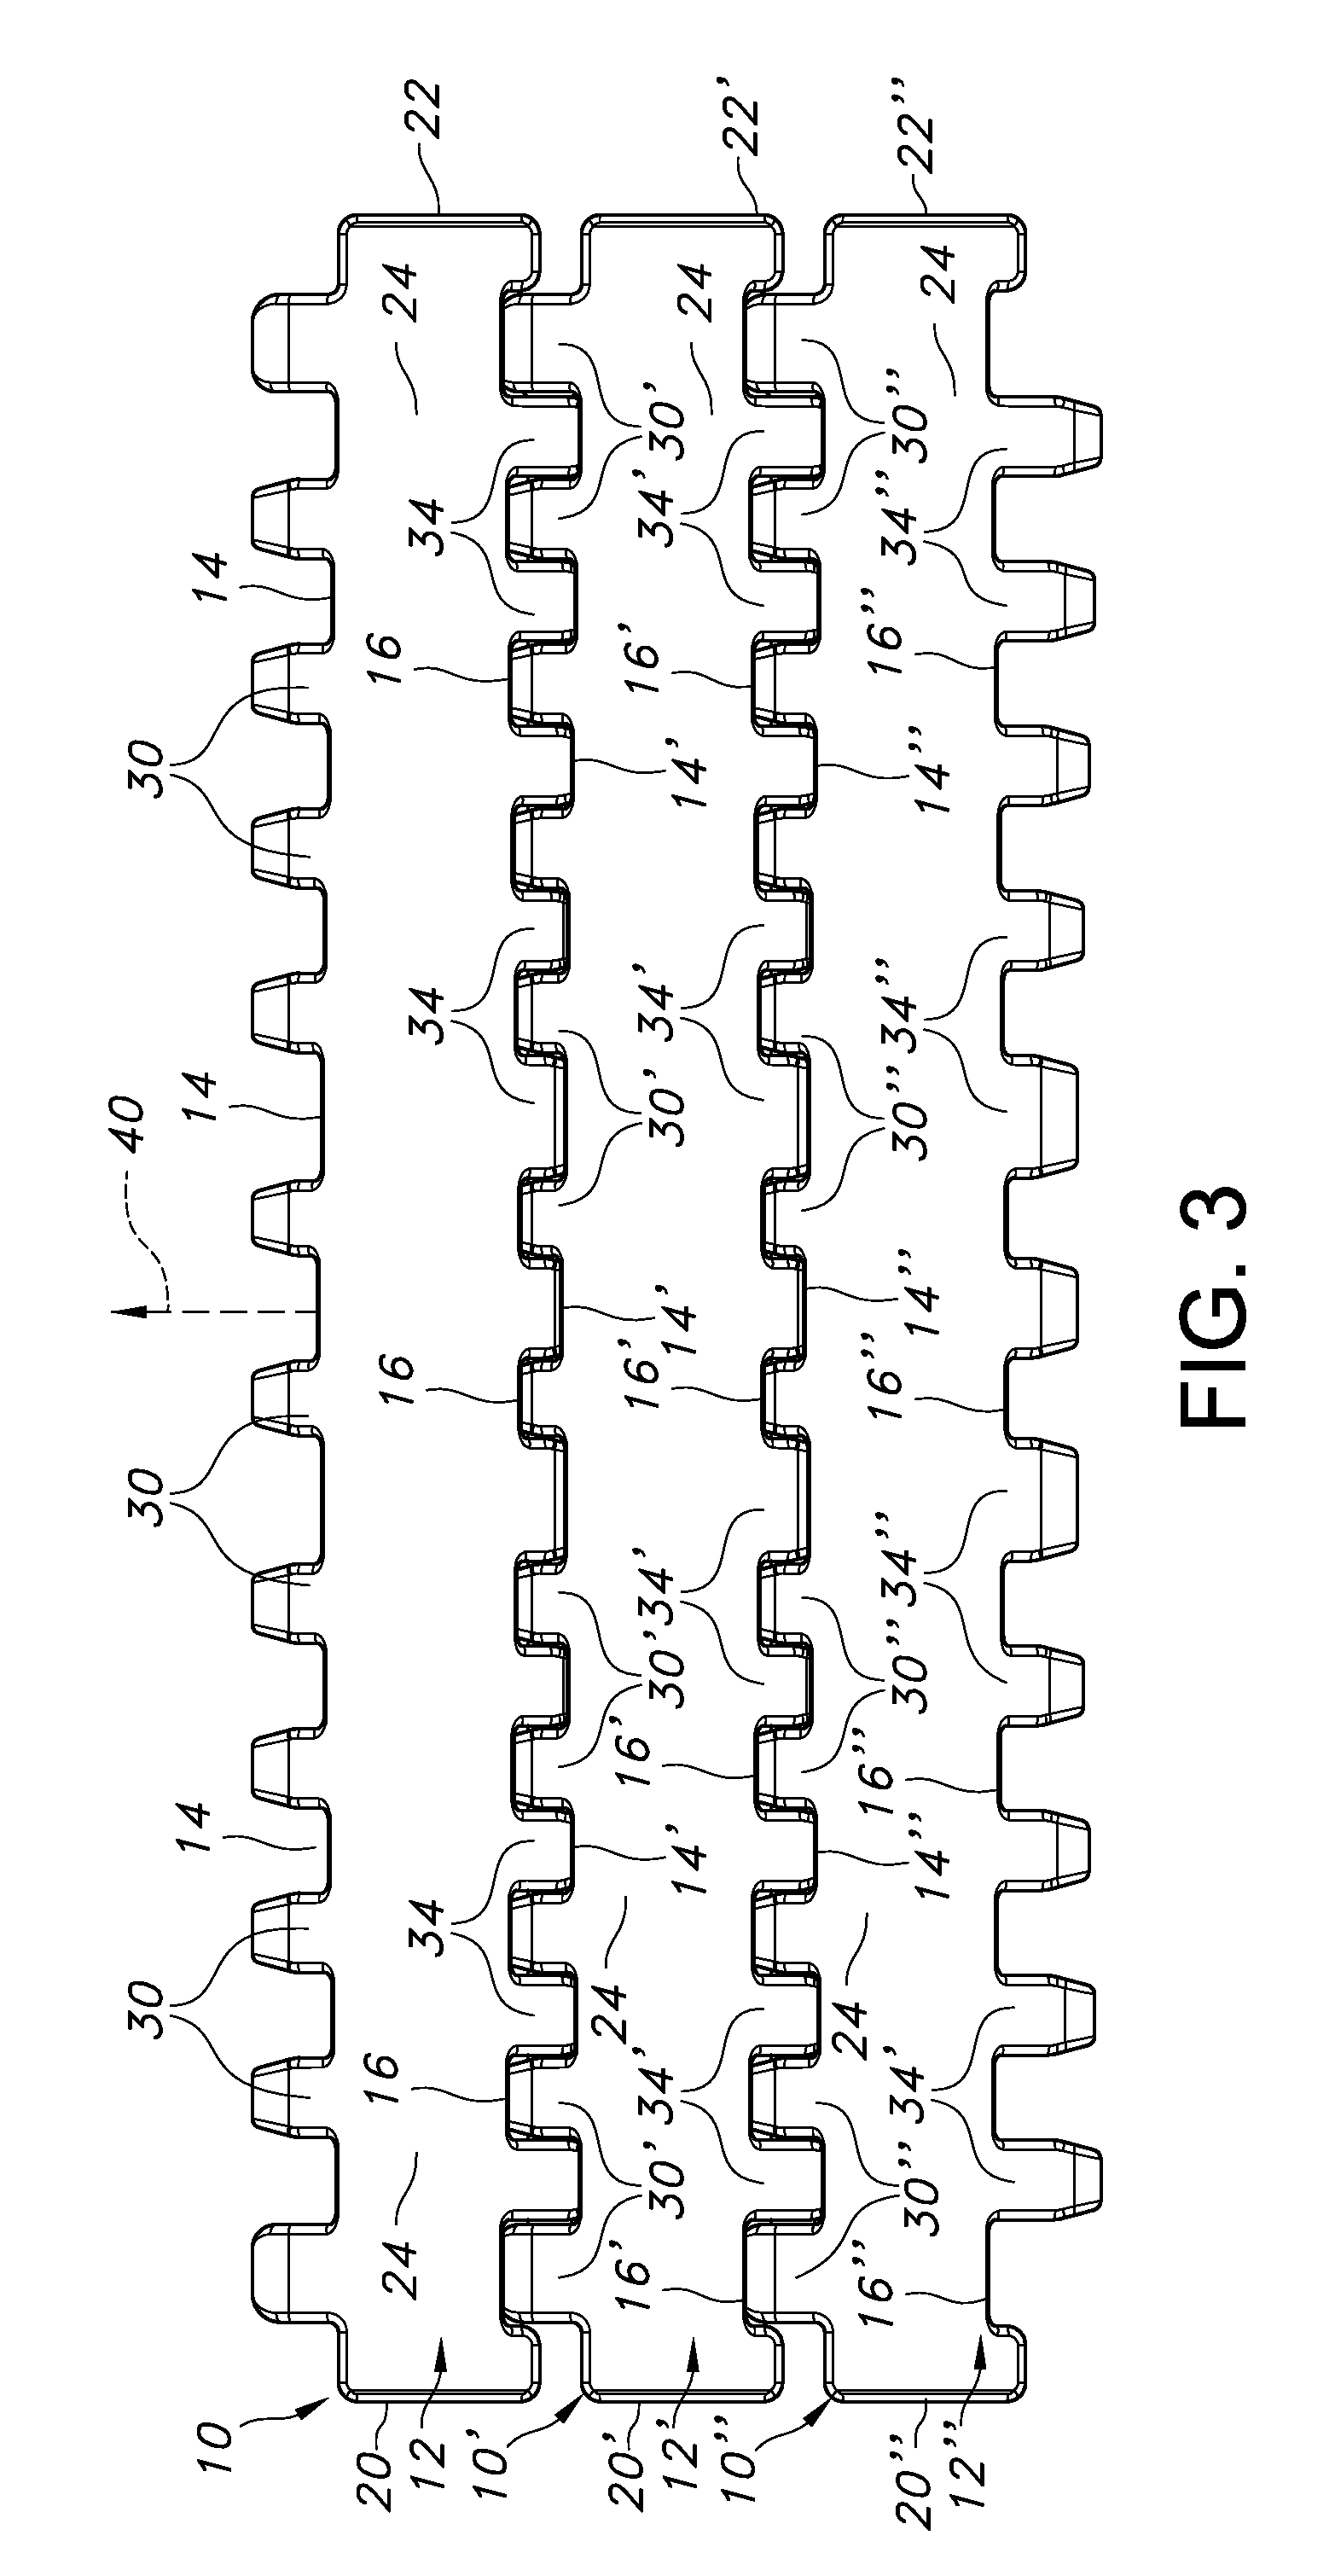 Radius chain modular conveyor